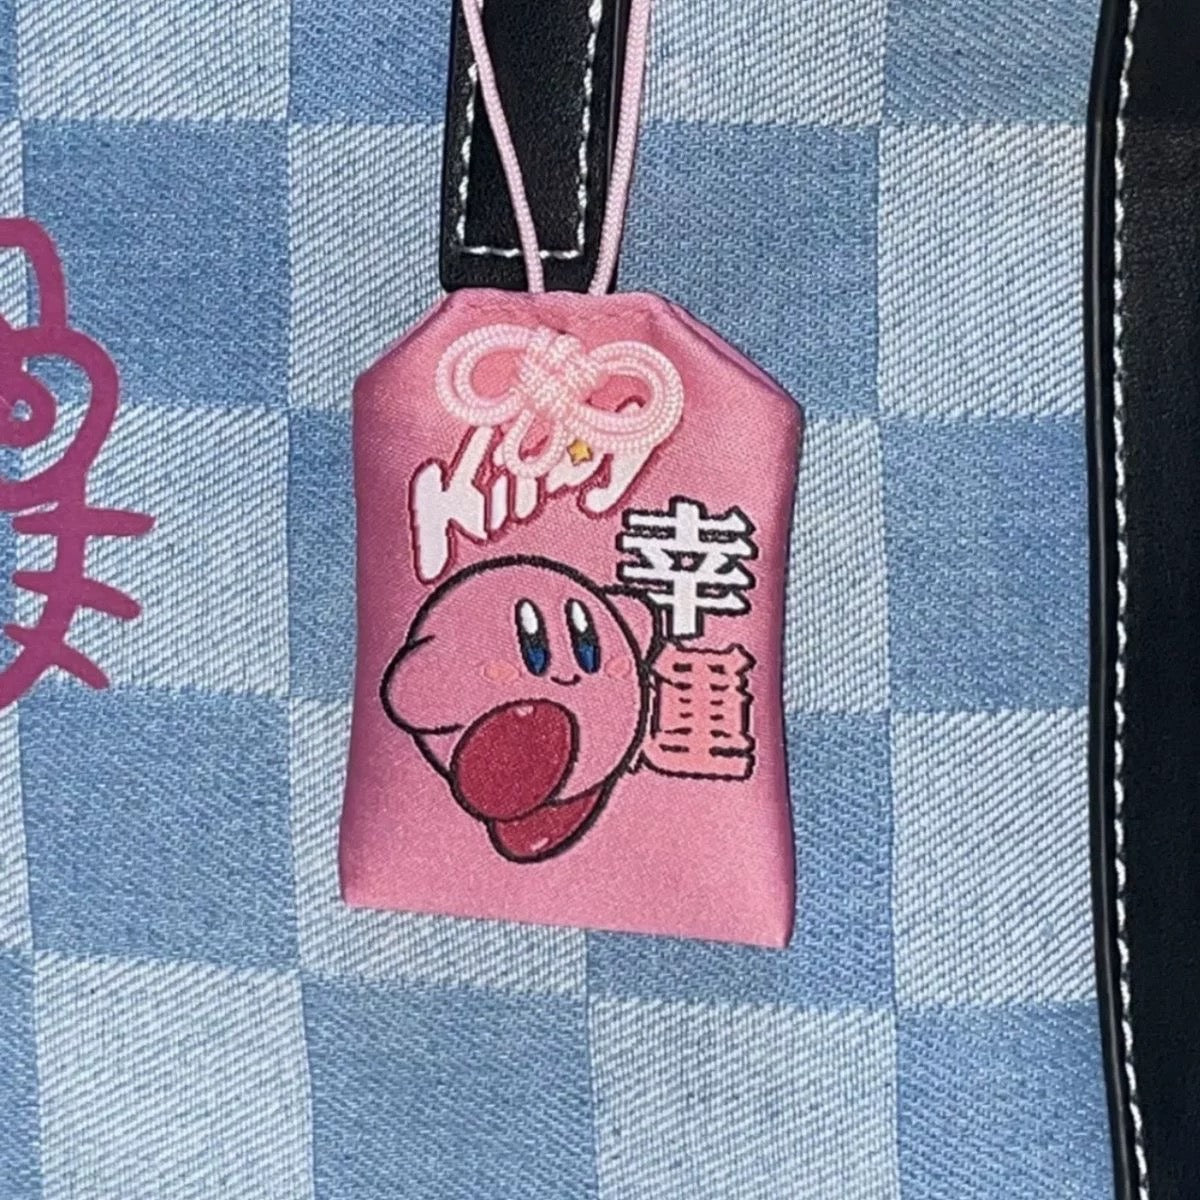 Kirby Omamori Lucky Charm